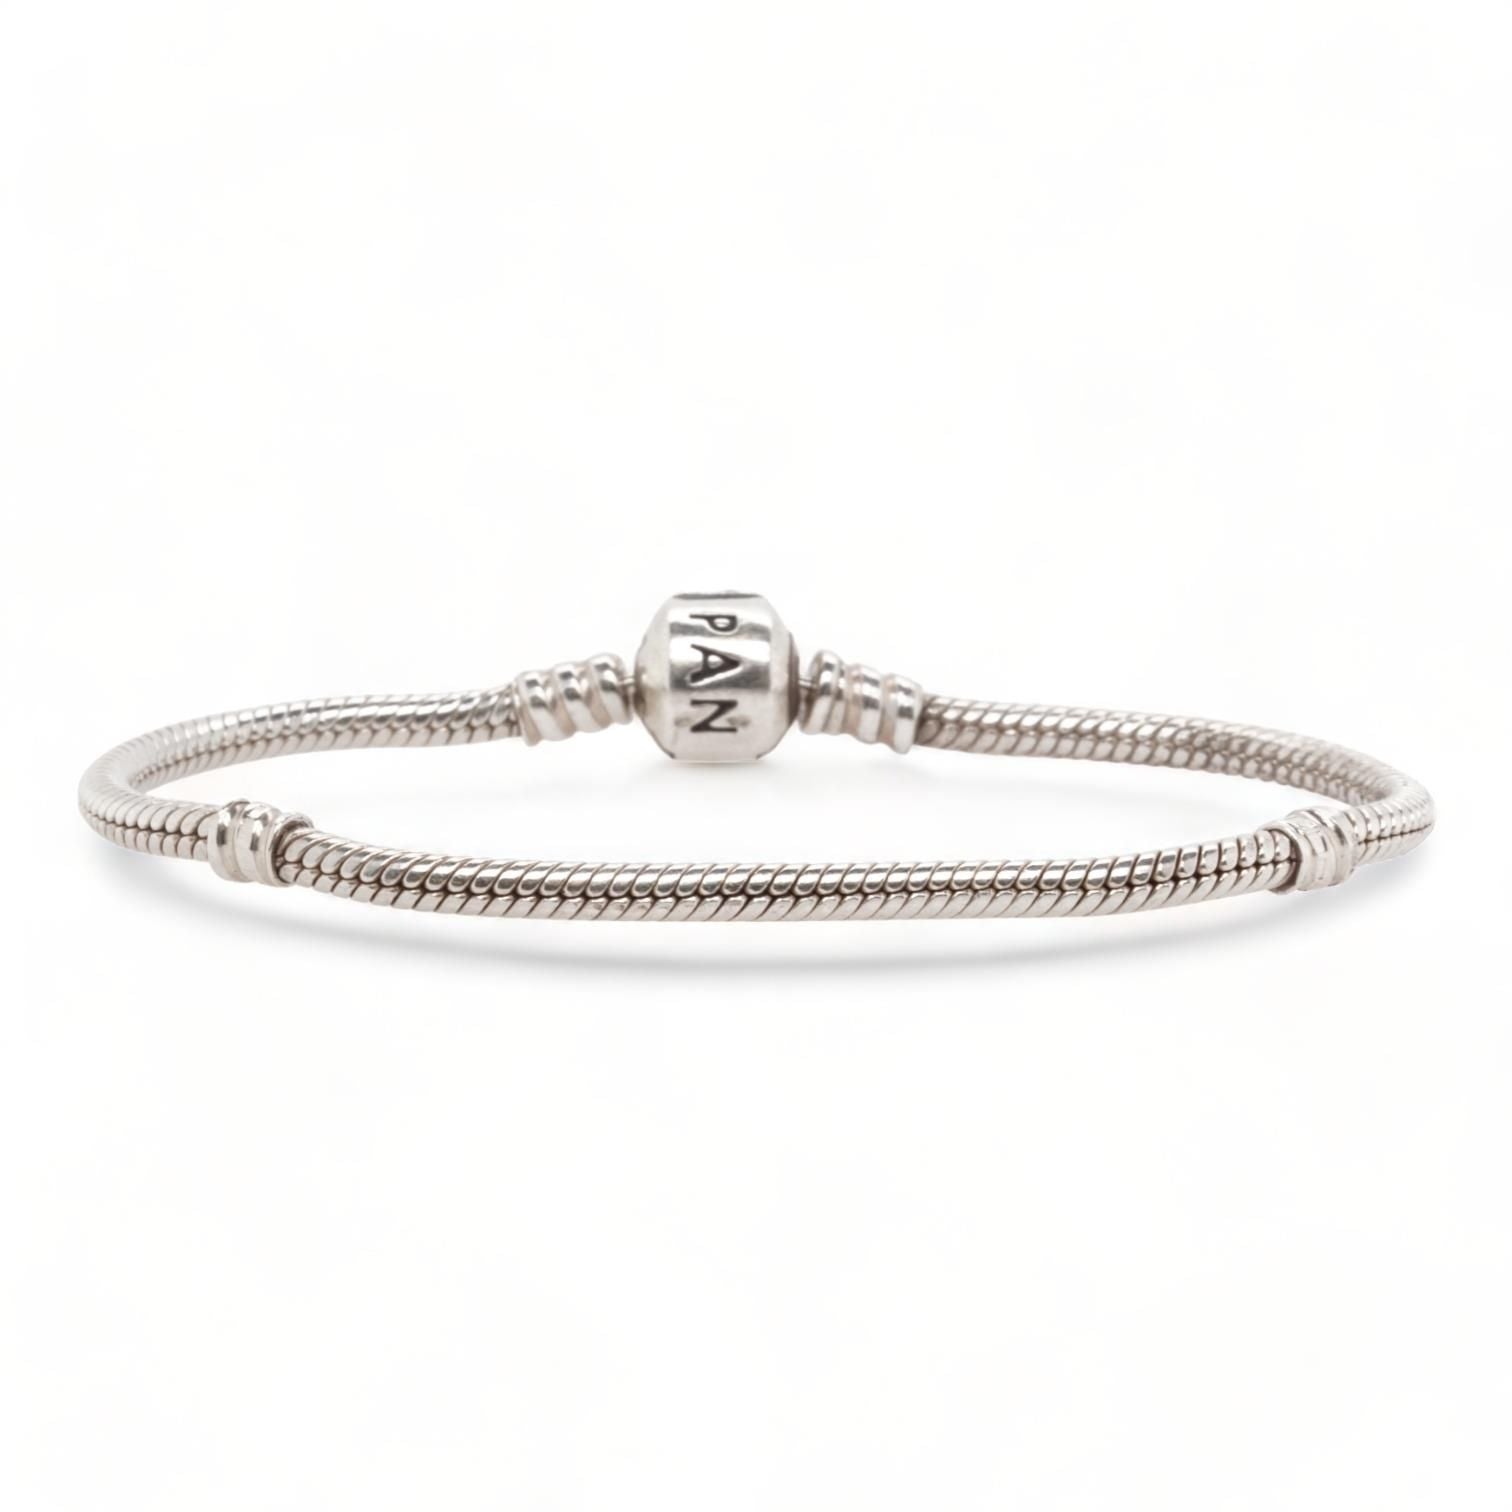 Louis Vuitton - Authenticated Necklace - Platinum Silver for Women, Good Condition